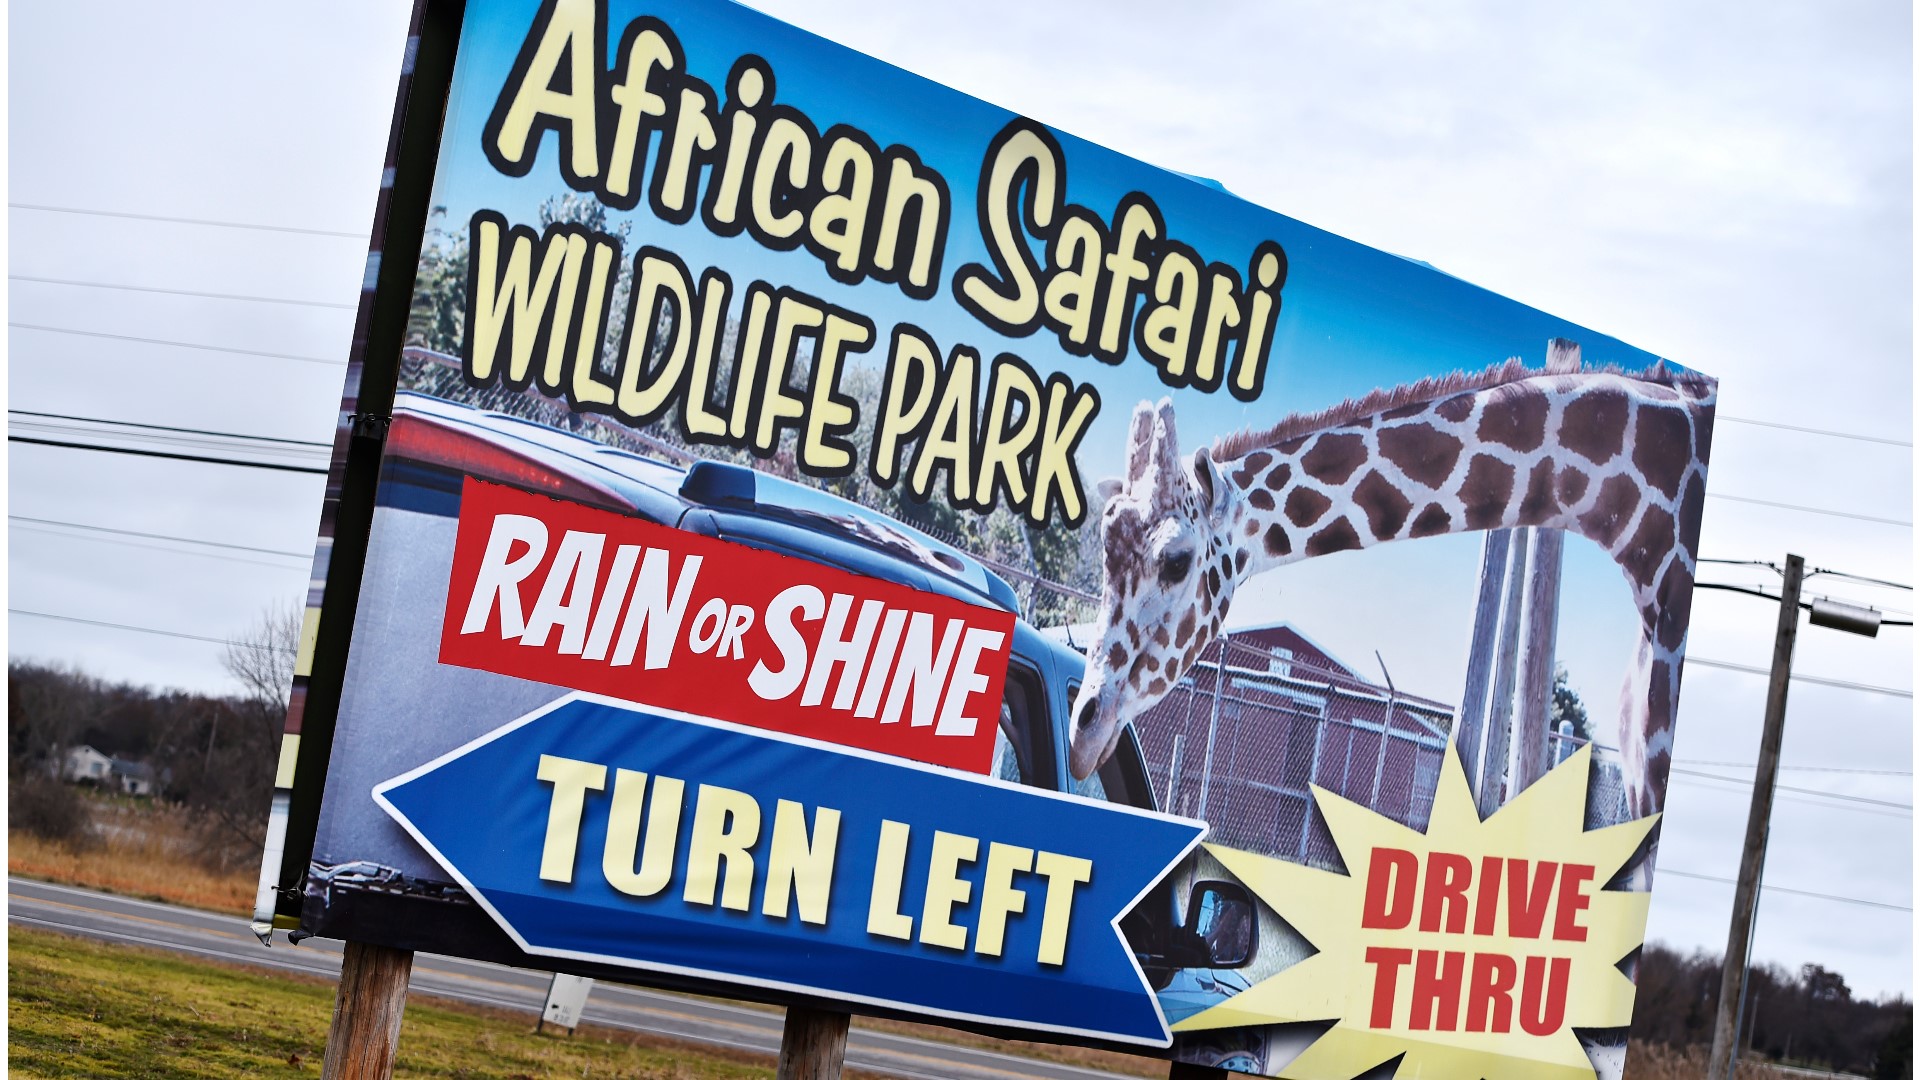 african safari wildlife park ann arbor